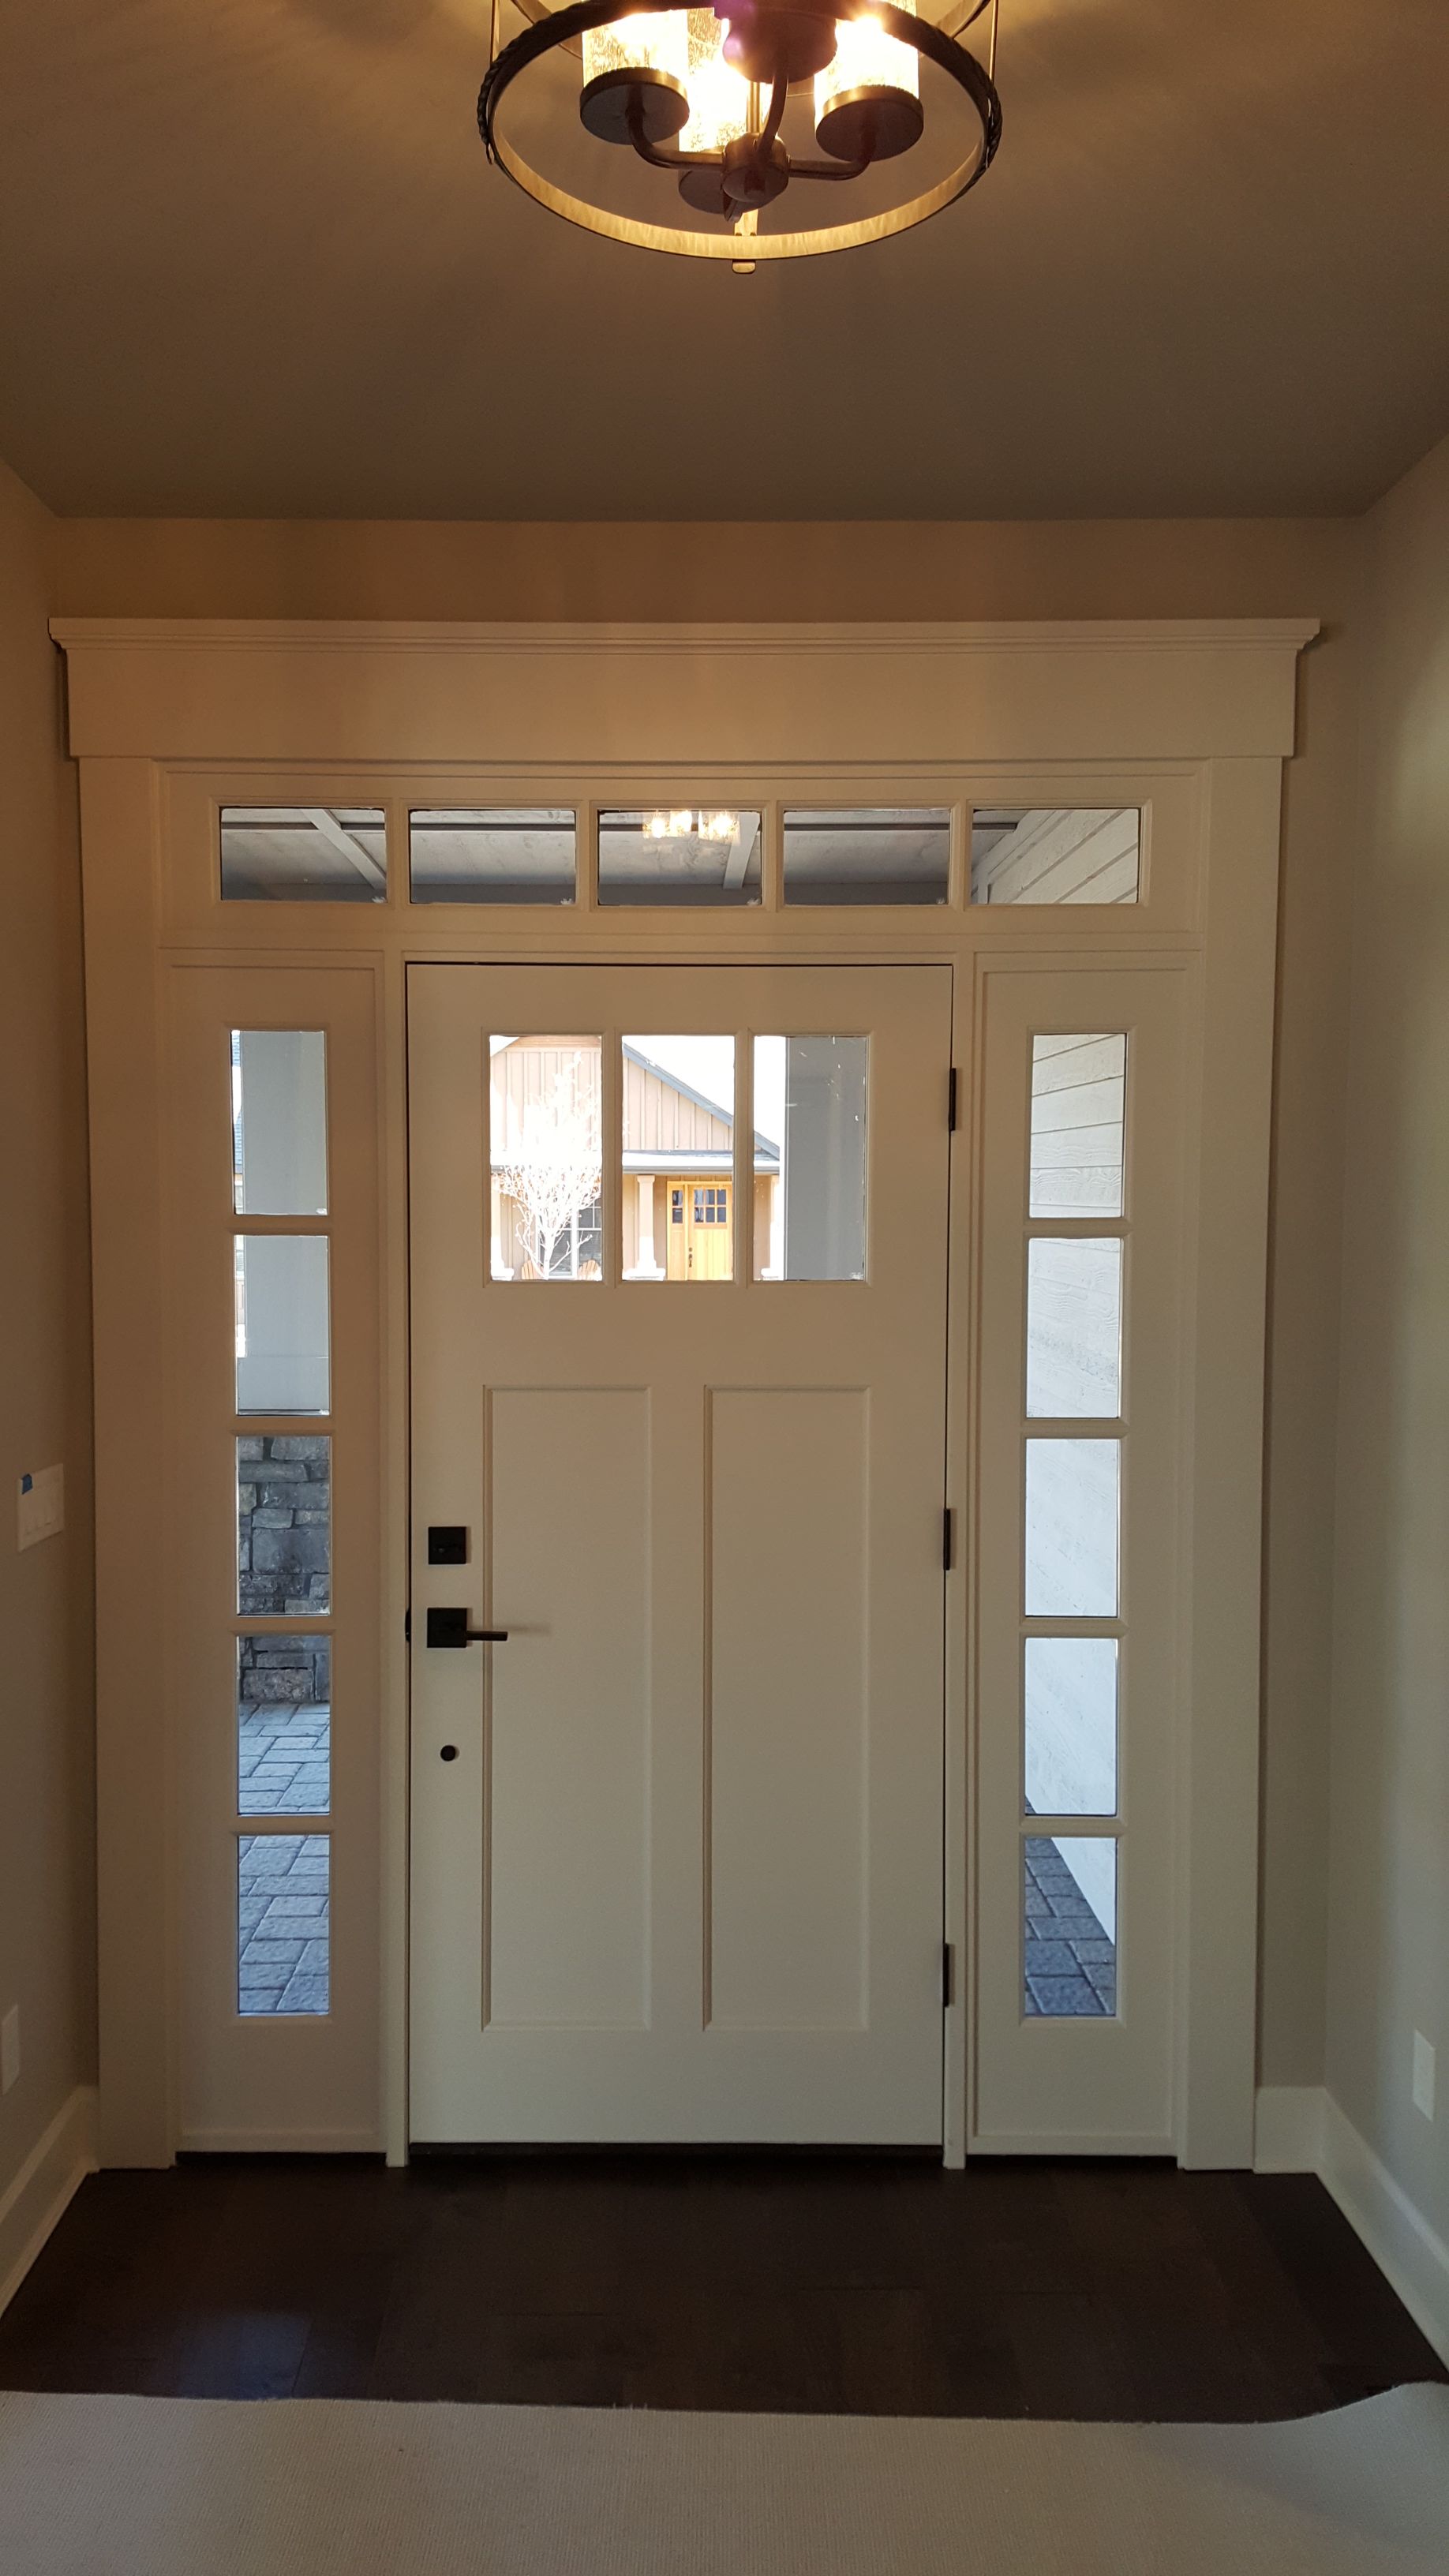 Transom Windows: Enhancing Interior Doors With Overhead Light